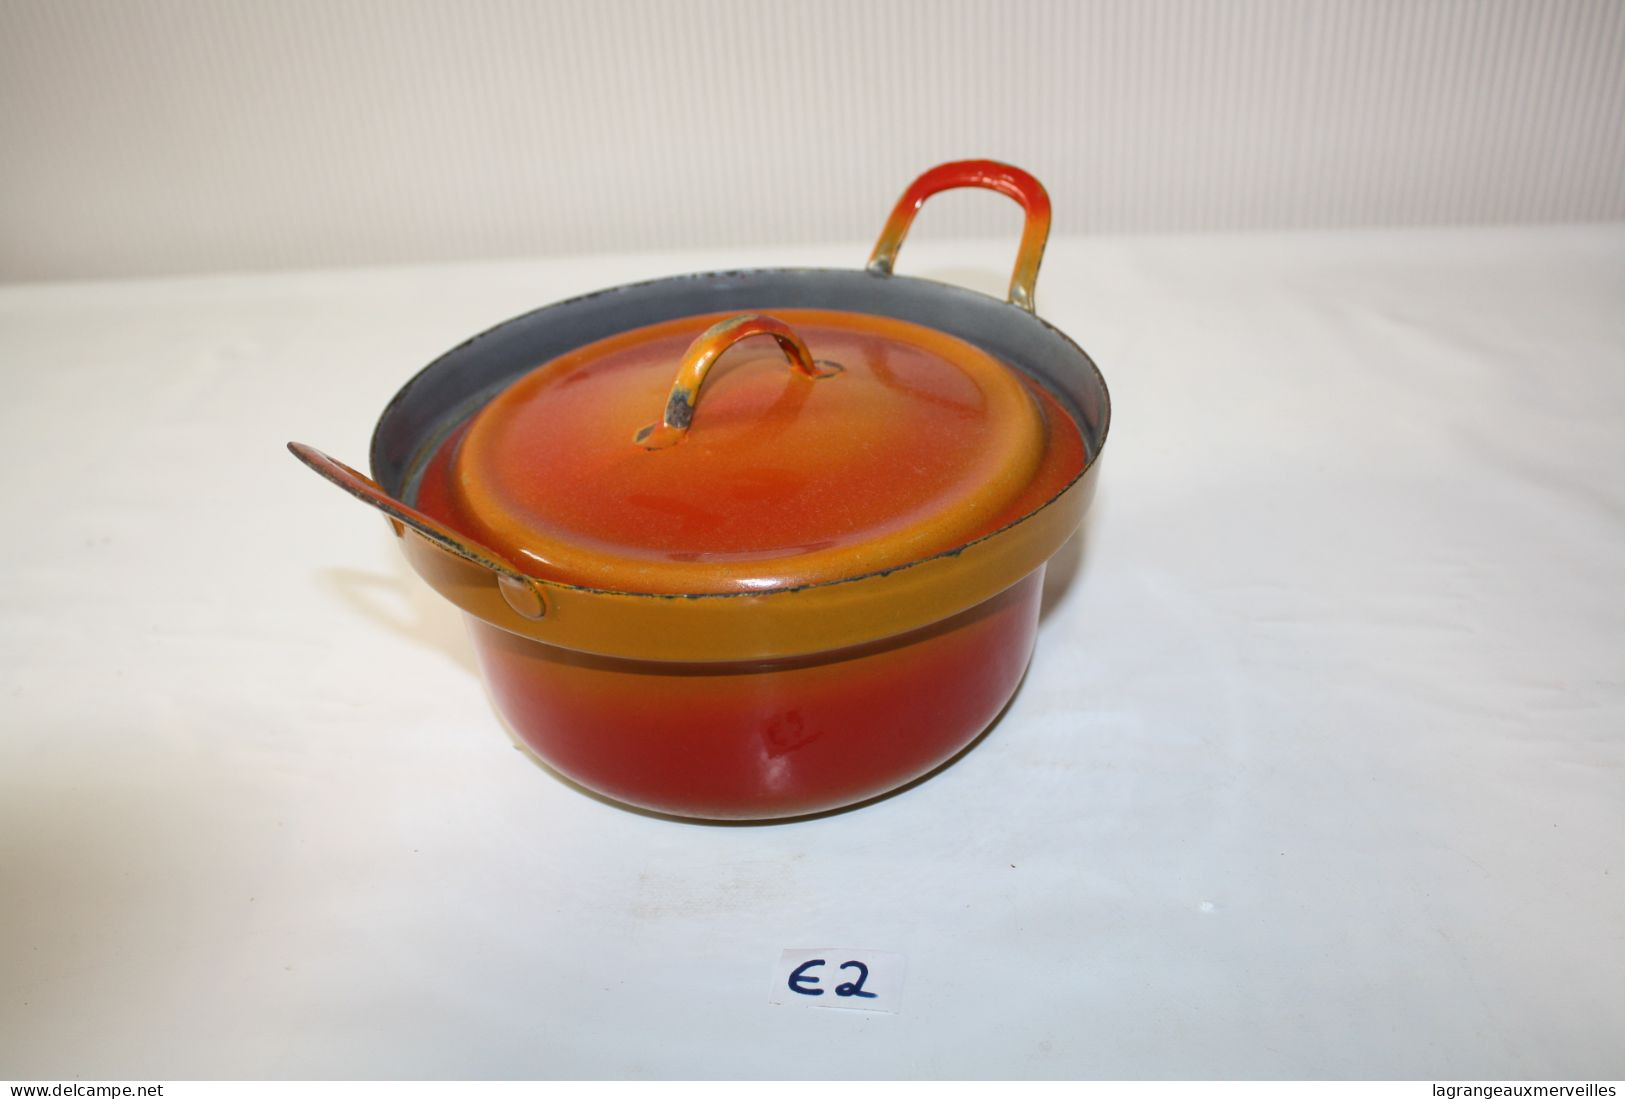 E2 Ancienne Marmite - Casserole- Orange - Vintage - Auberge - Old School - Popular Art